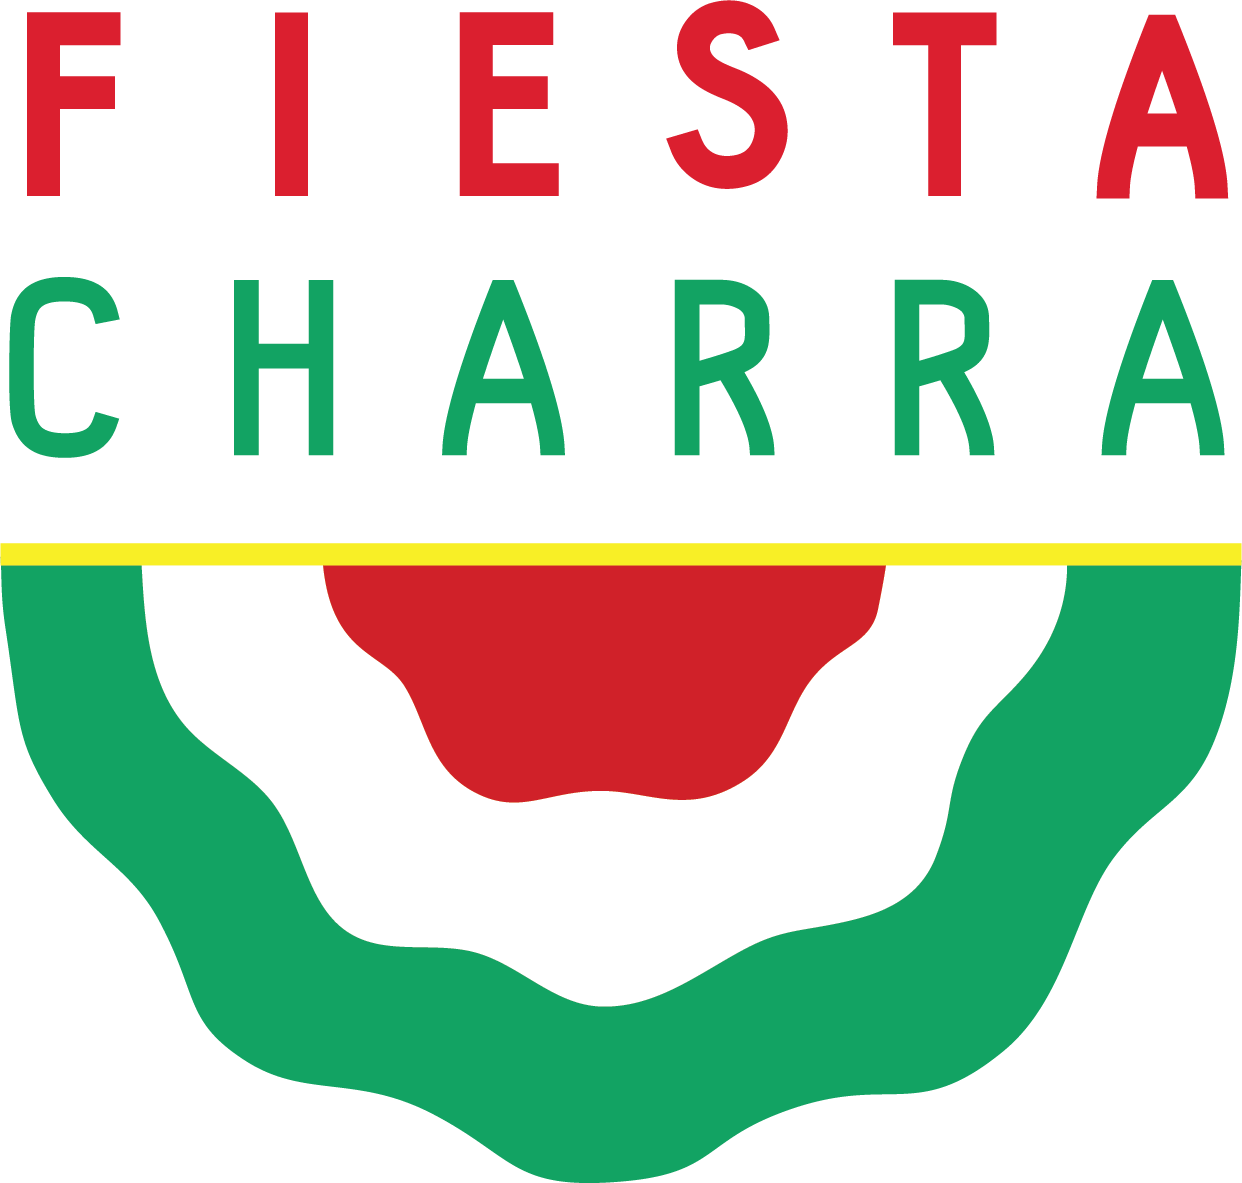 Charra Final Logo